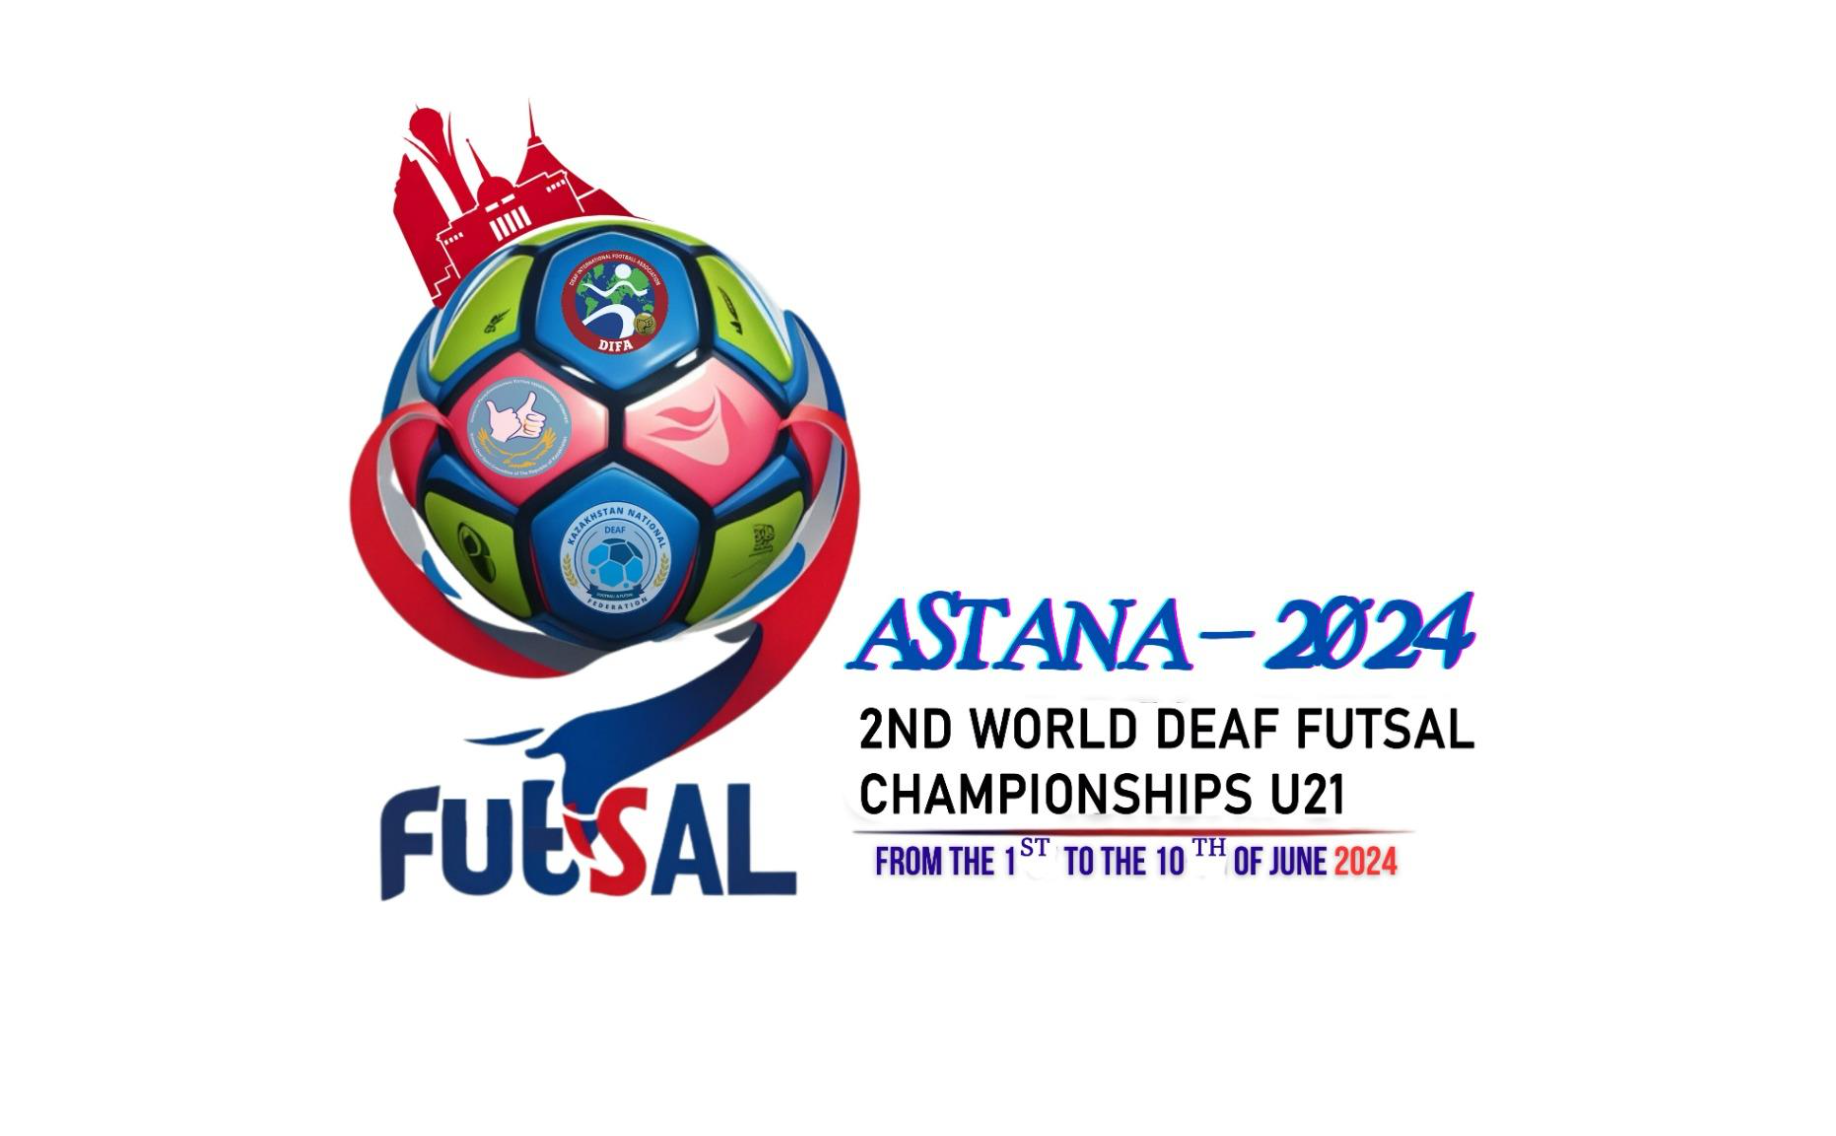 Information from Astana for U21 Futsal